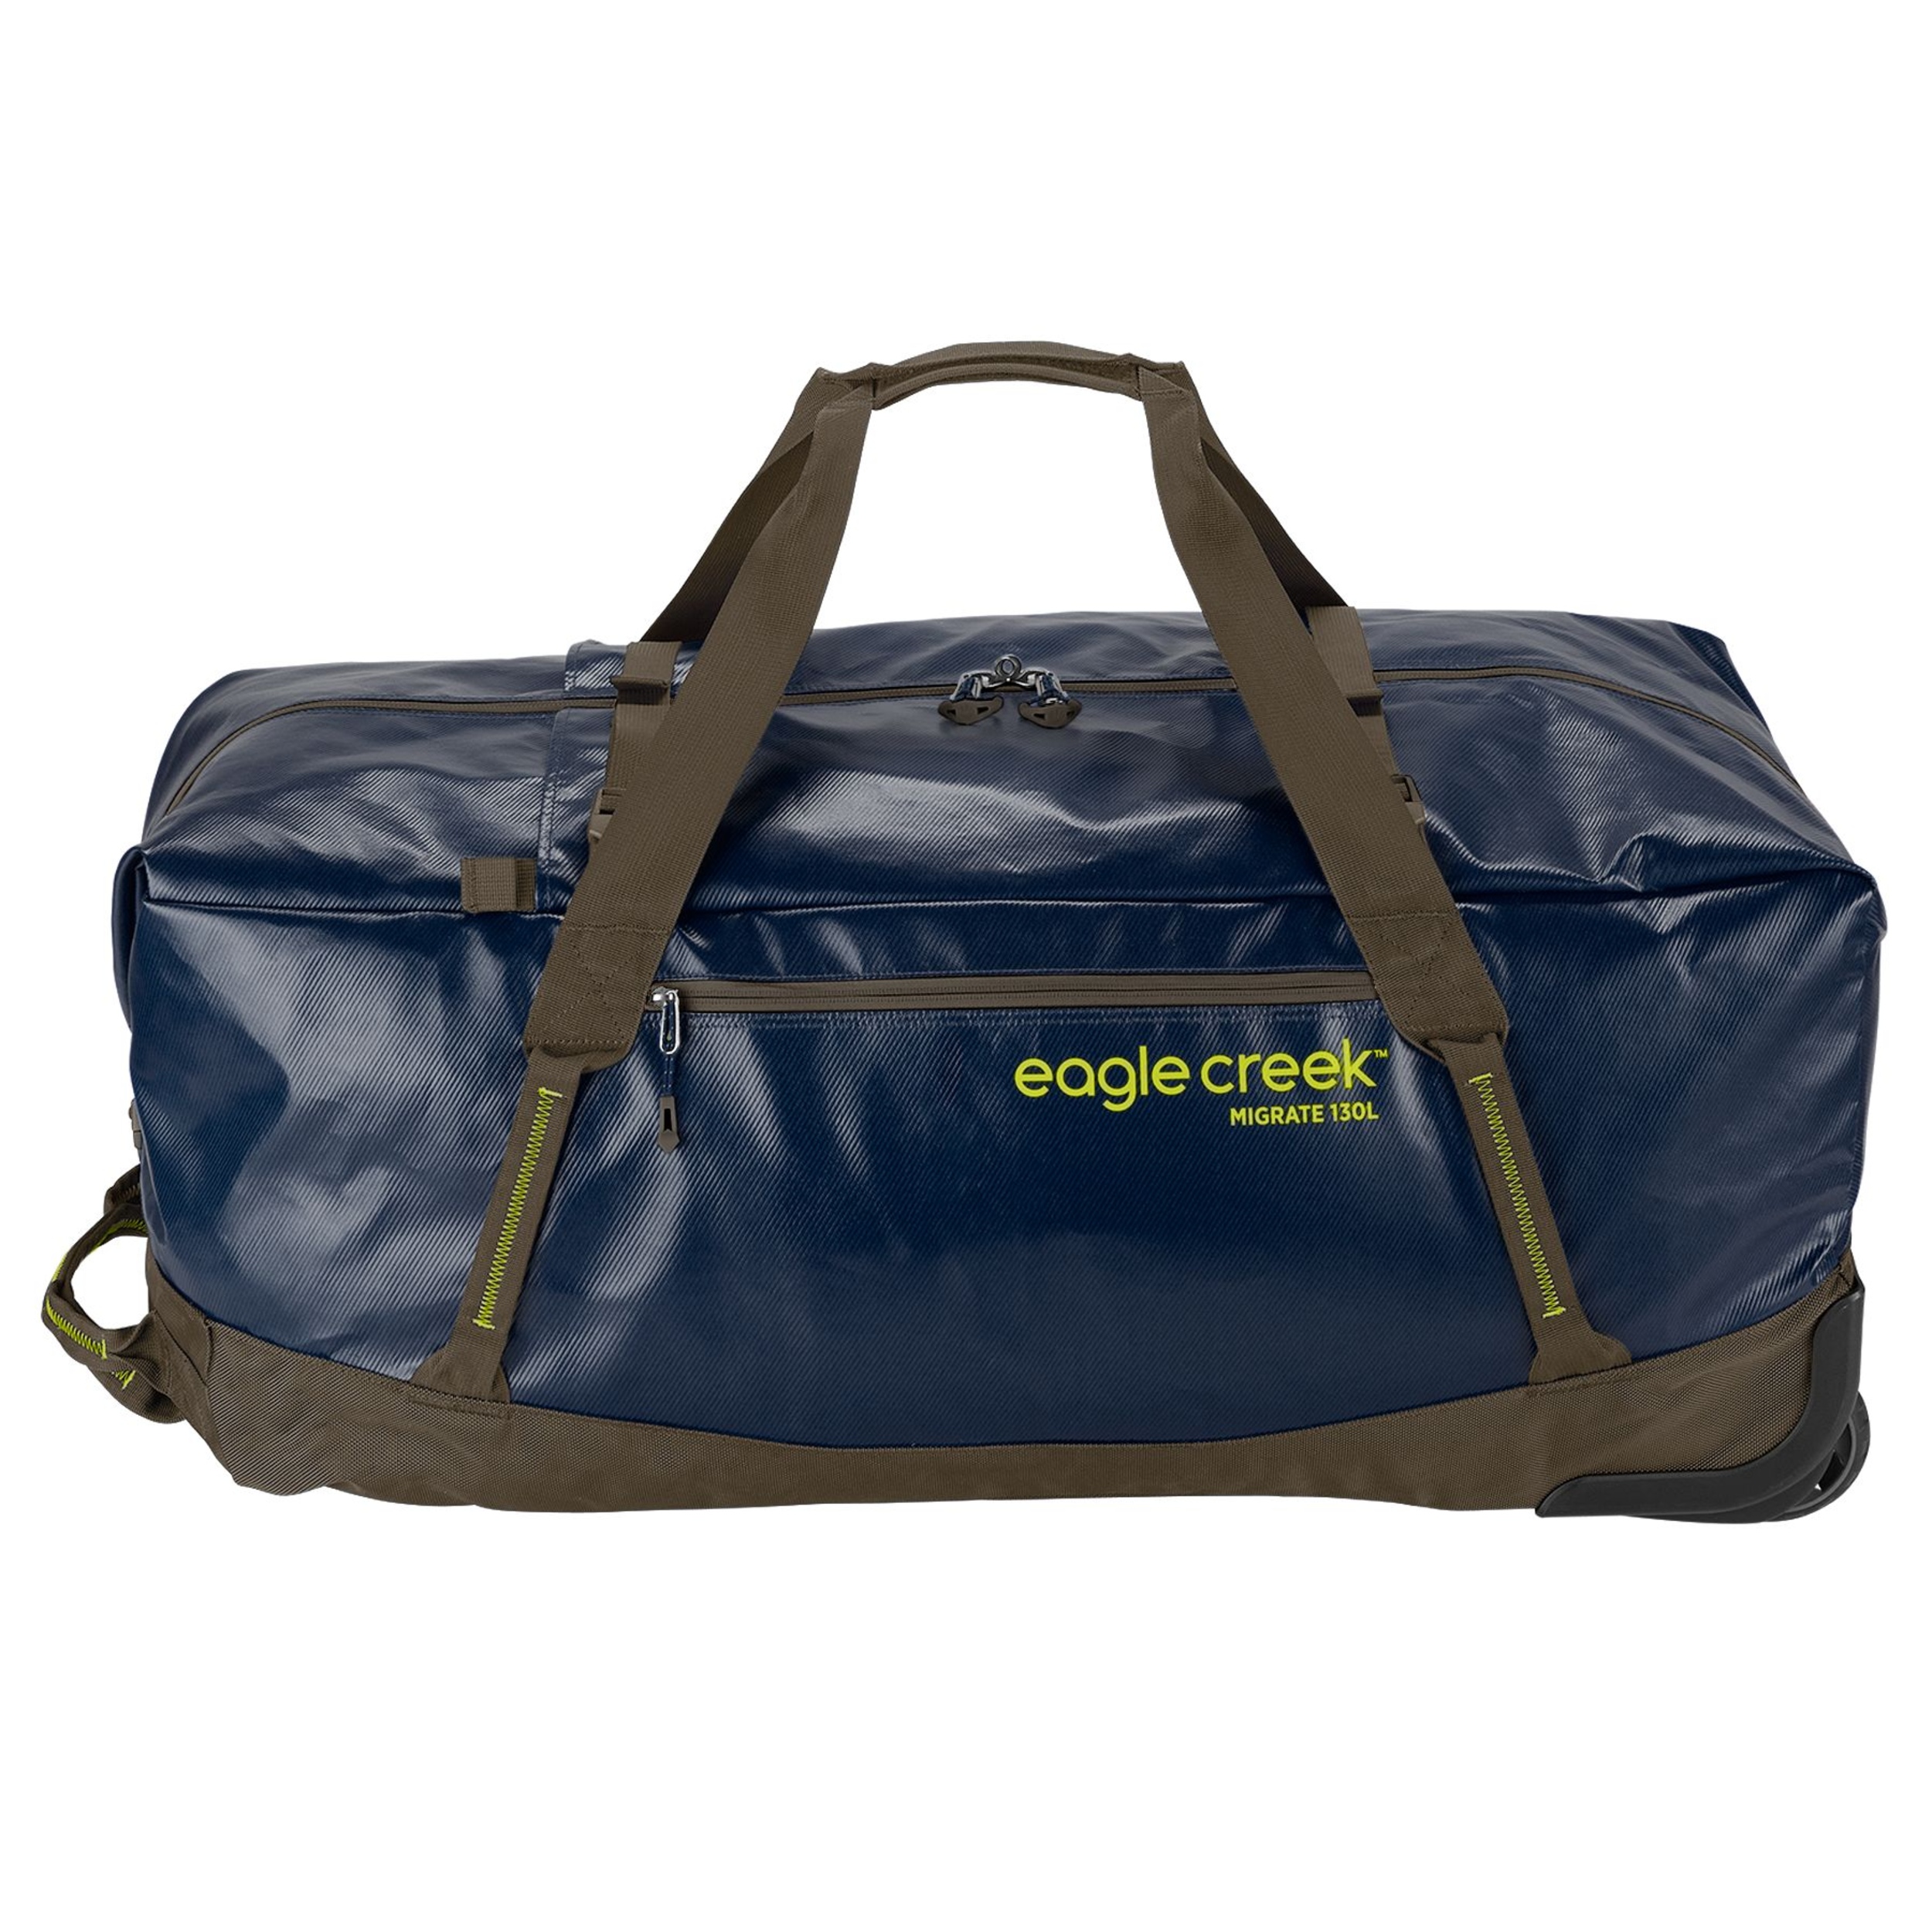 Eagle Creek Migrate 130L Wheeled Duffel Bag | SportChek